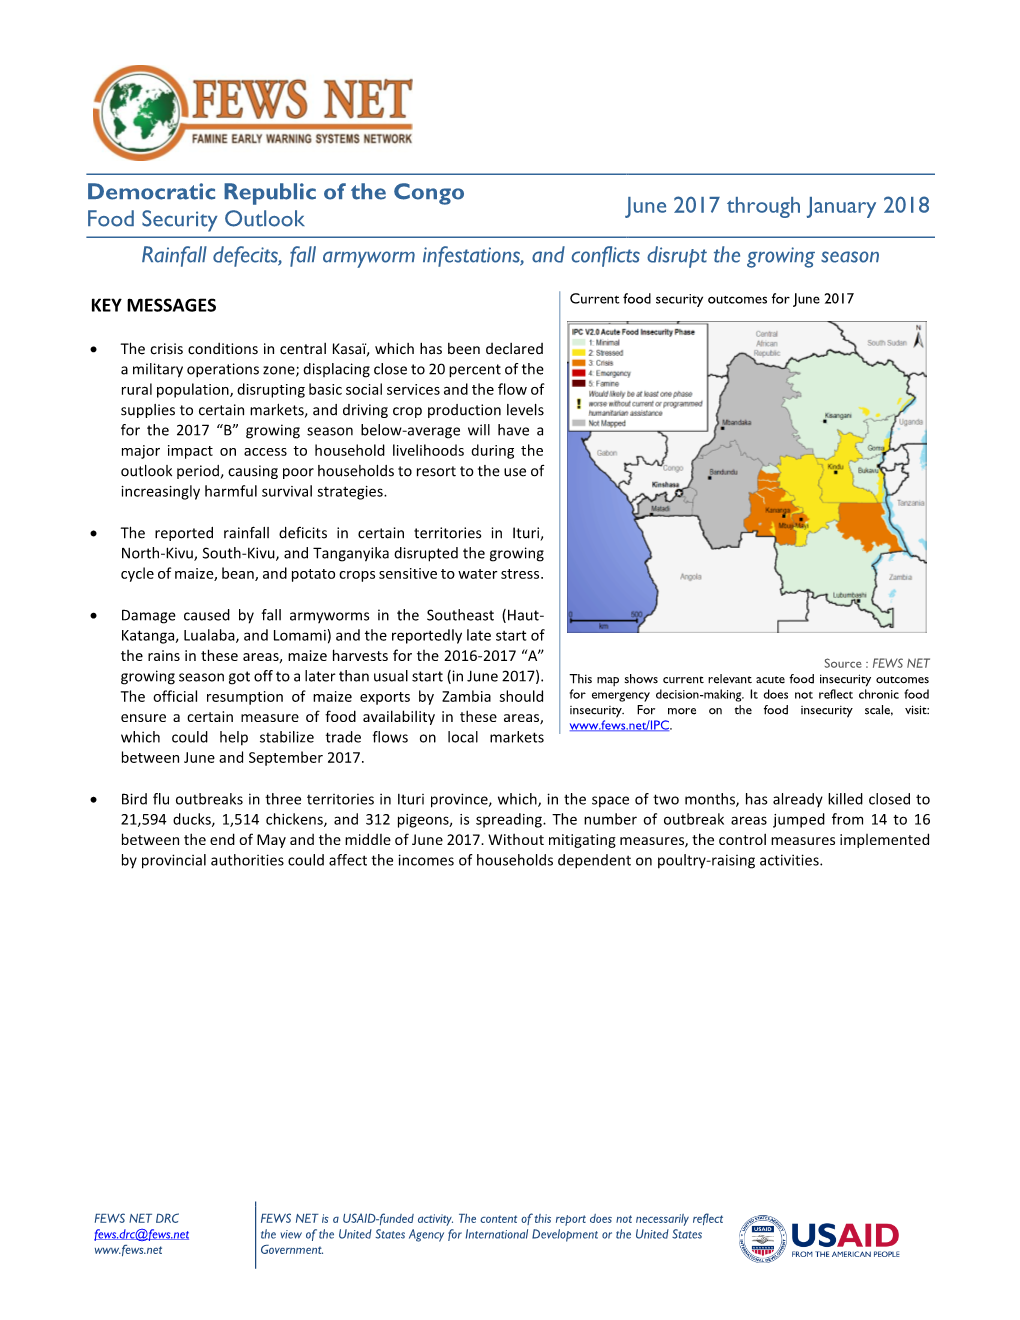 Democratic Republic of Congo Food Security Outlook June 2017 Through